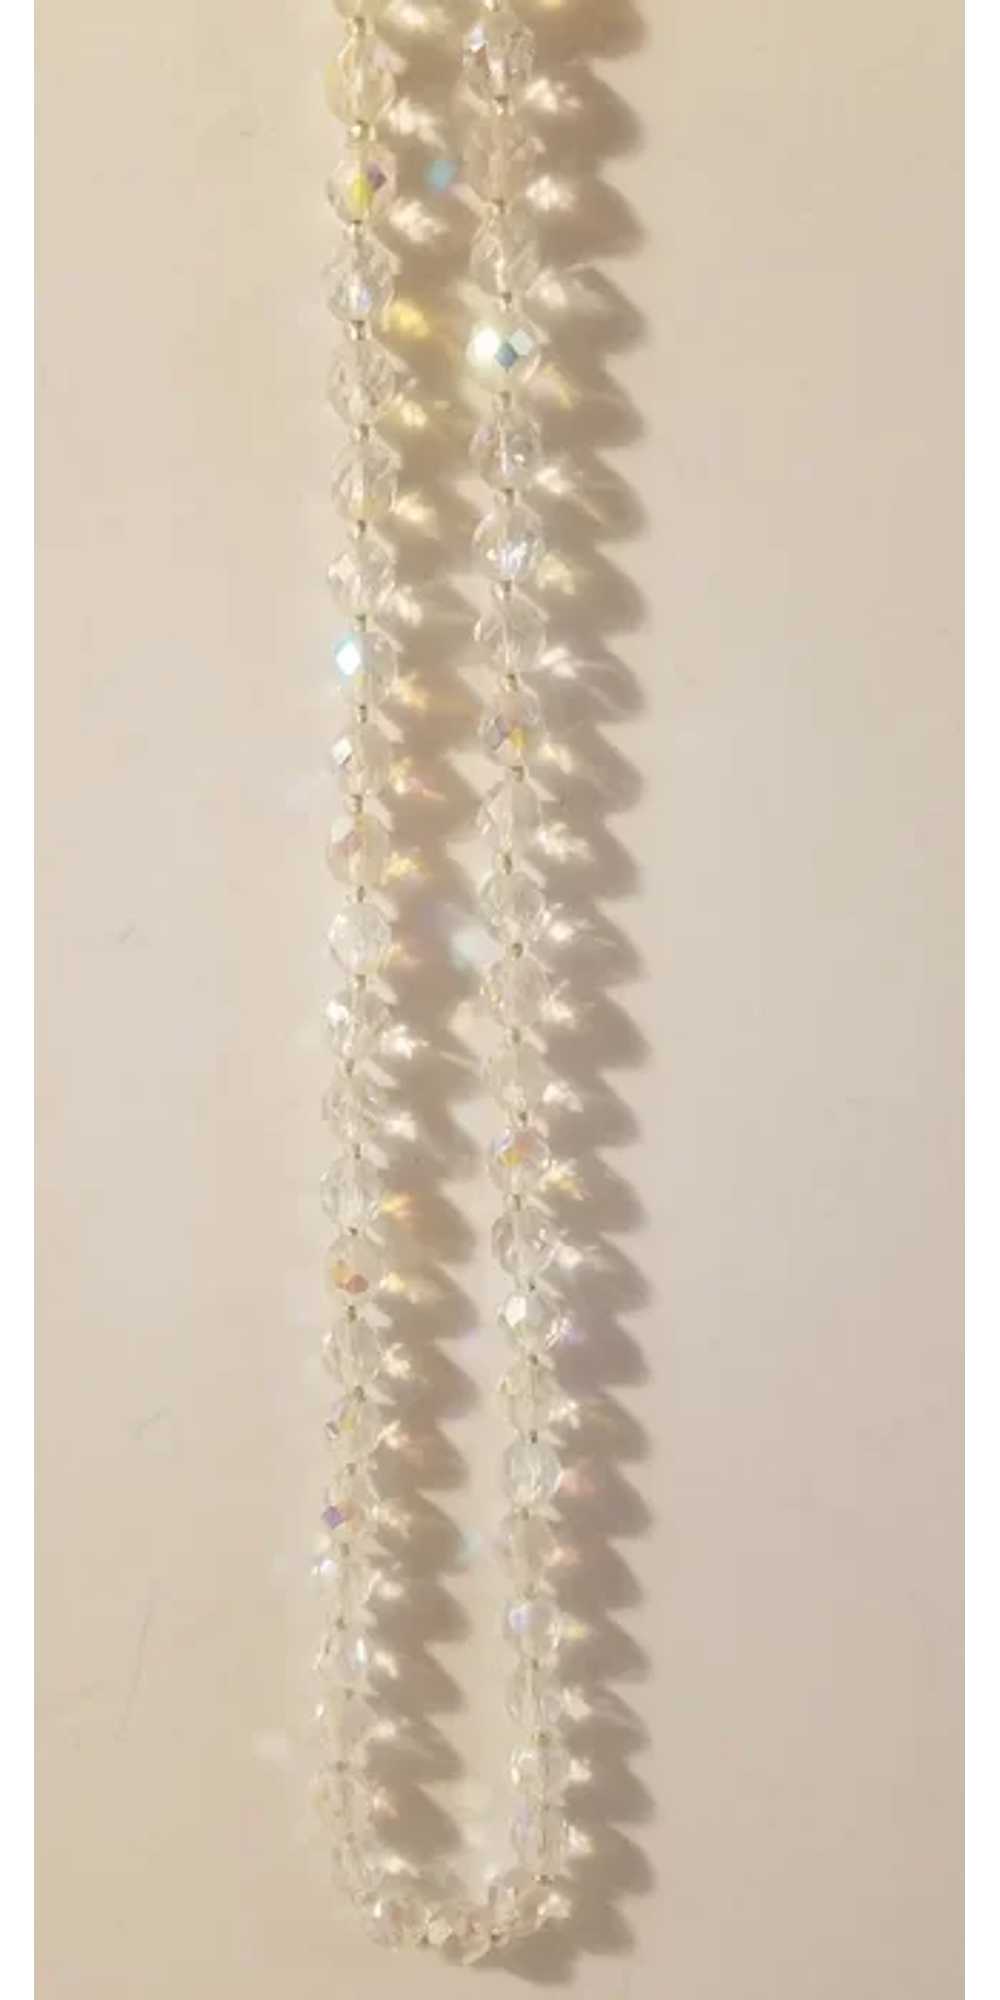 Aurora borealis bead necklaces - image 5